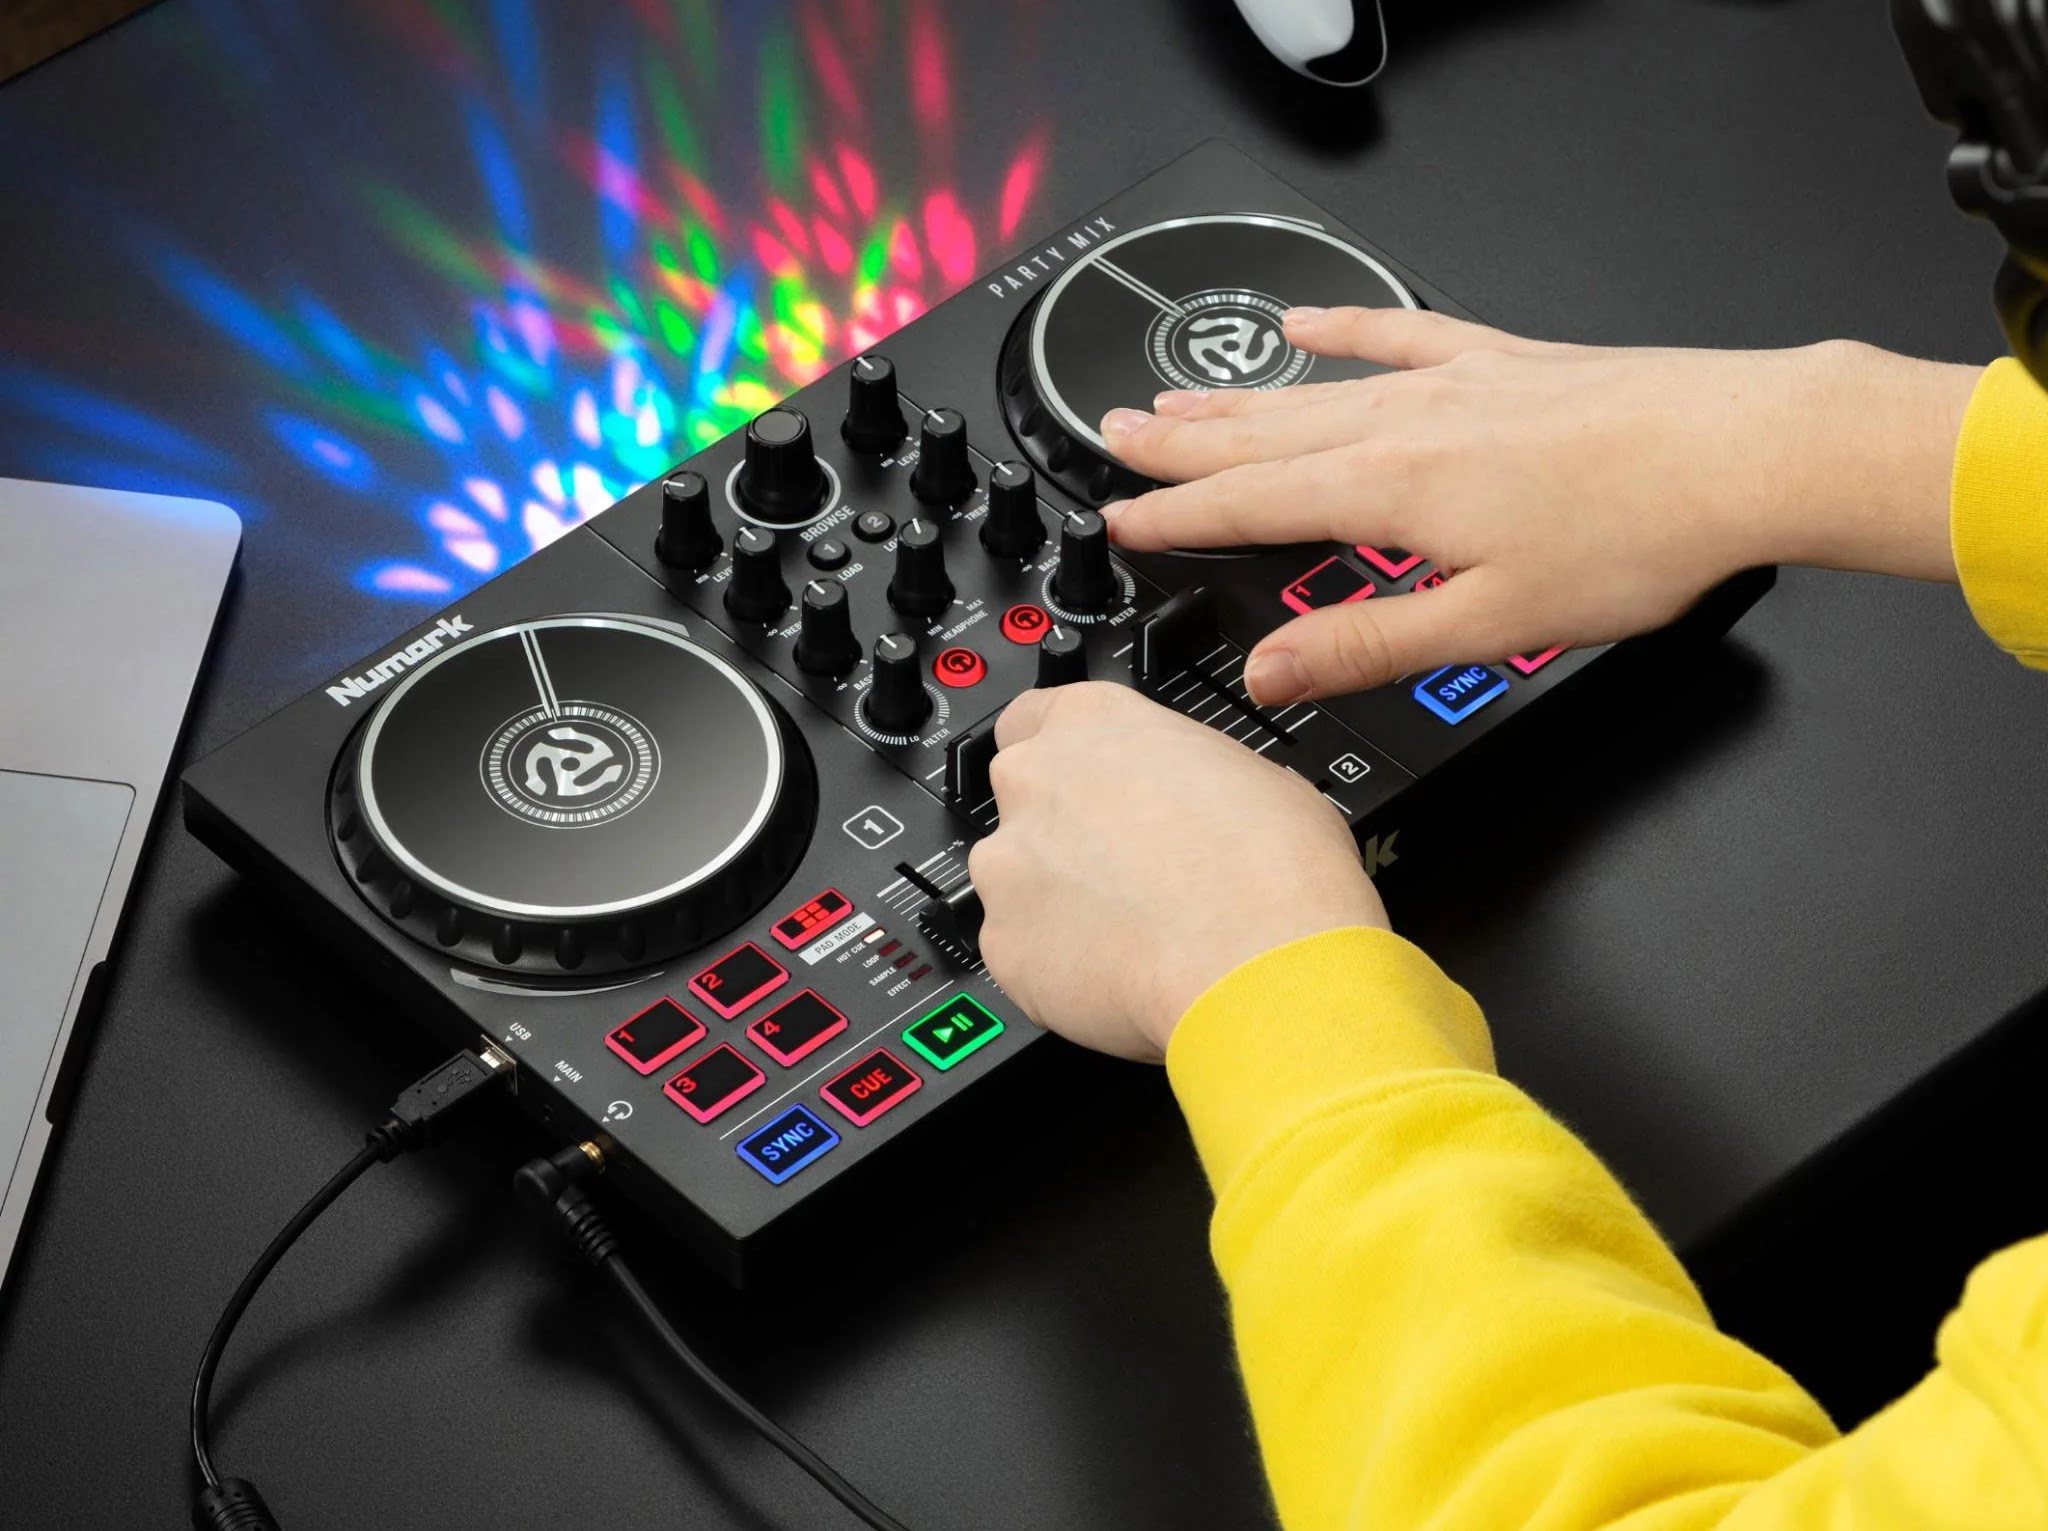 DJ Controller Review: Unbiased Analysis and Top Picks